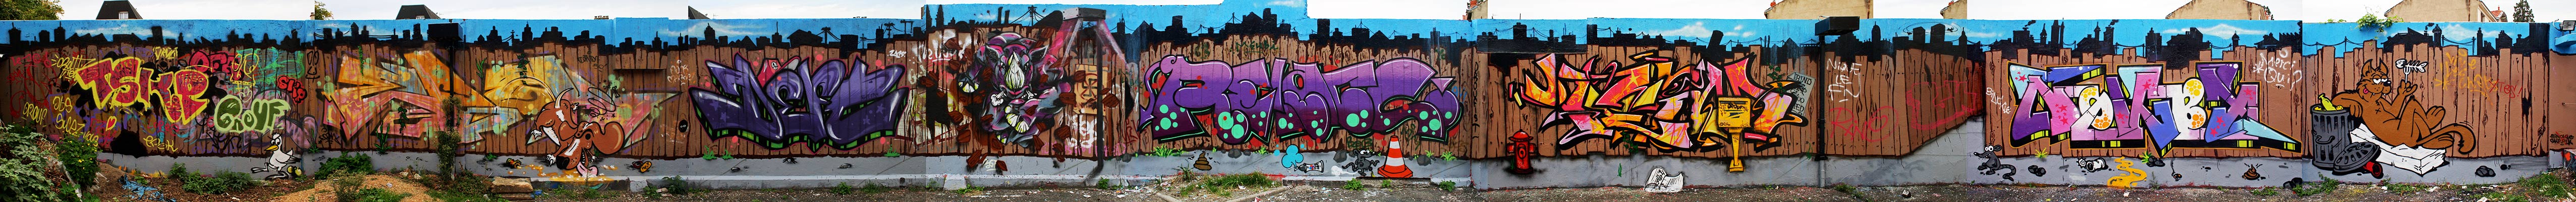 fresque_palissade_graffiti_2015